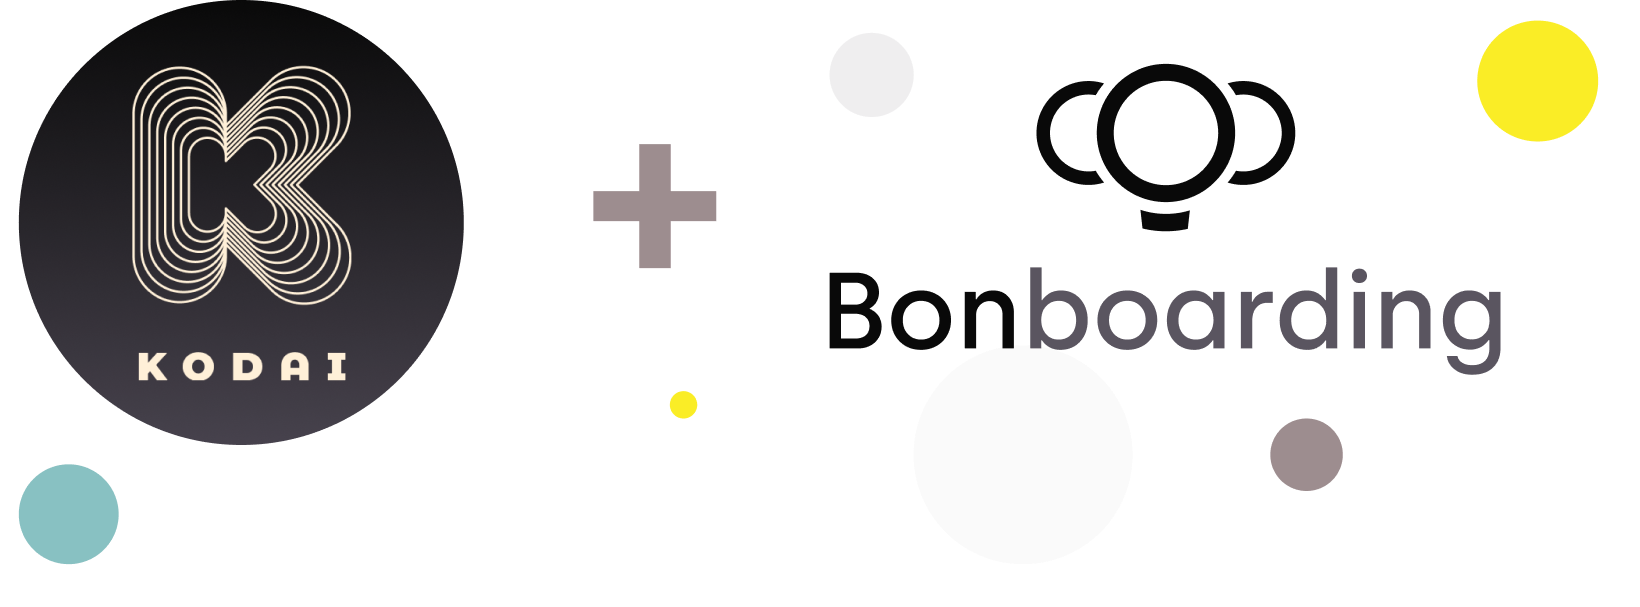 The logo of Kodai and Bonboarding